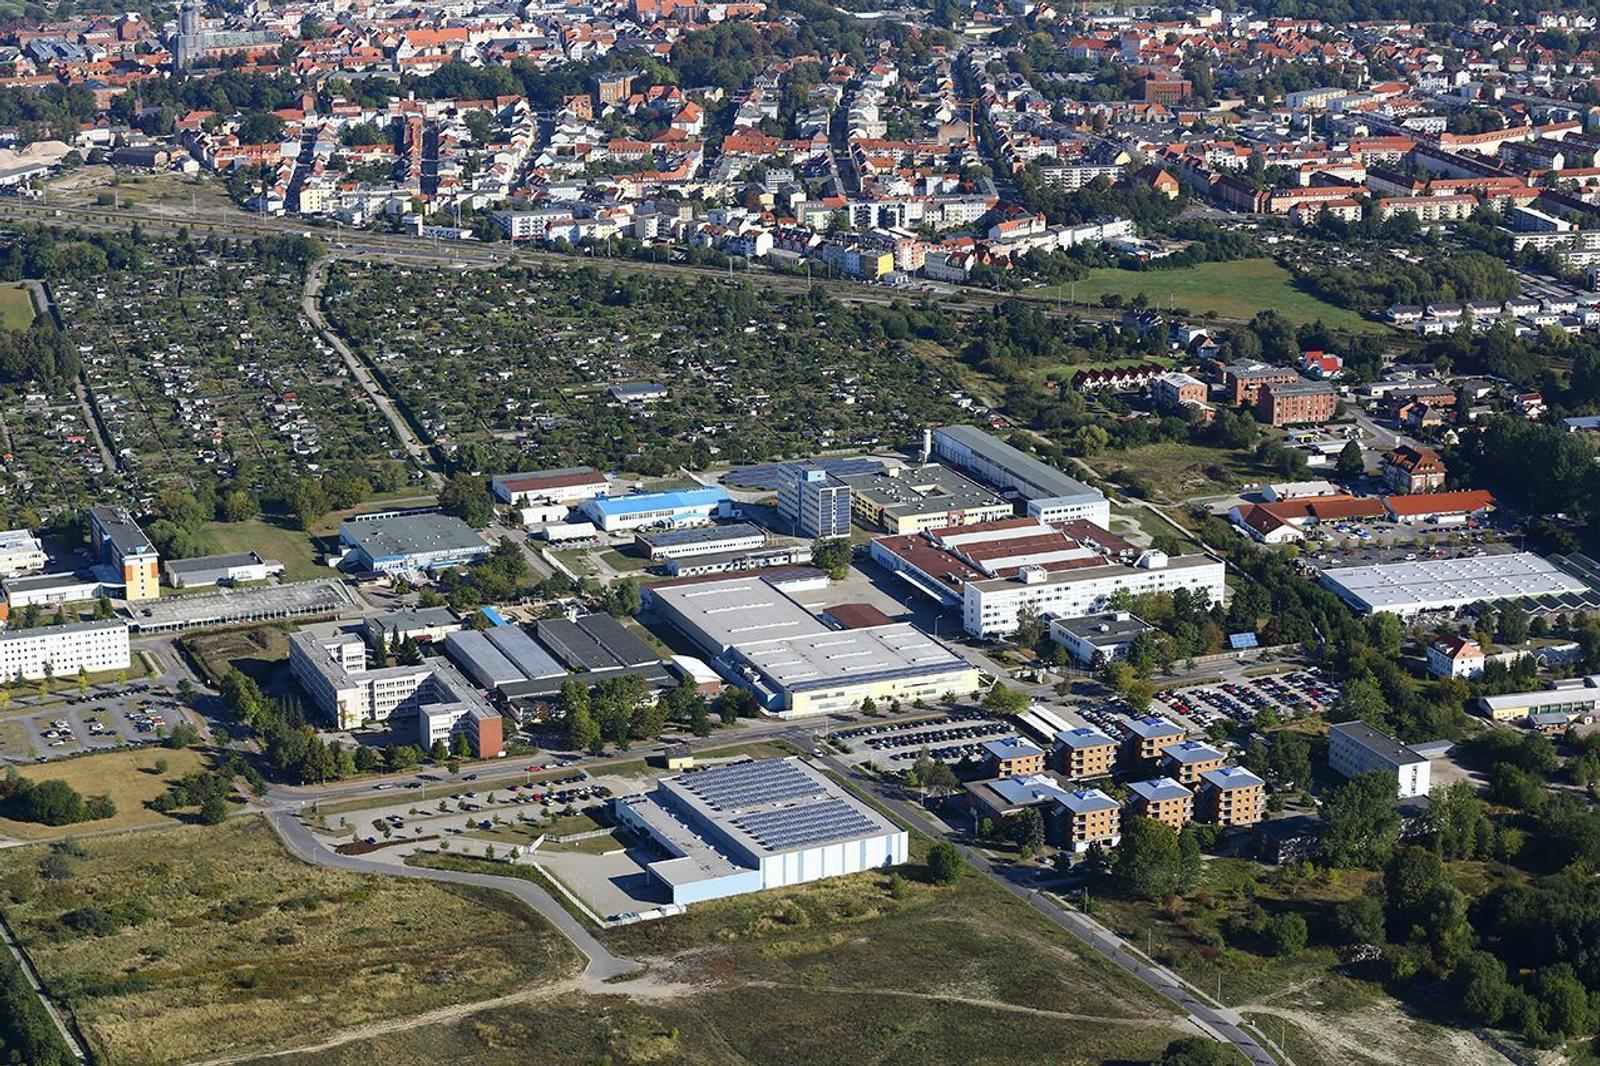 Standort Greifswald